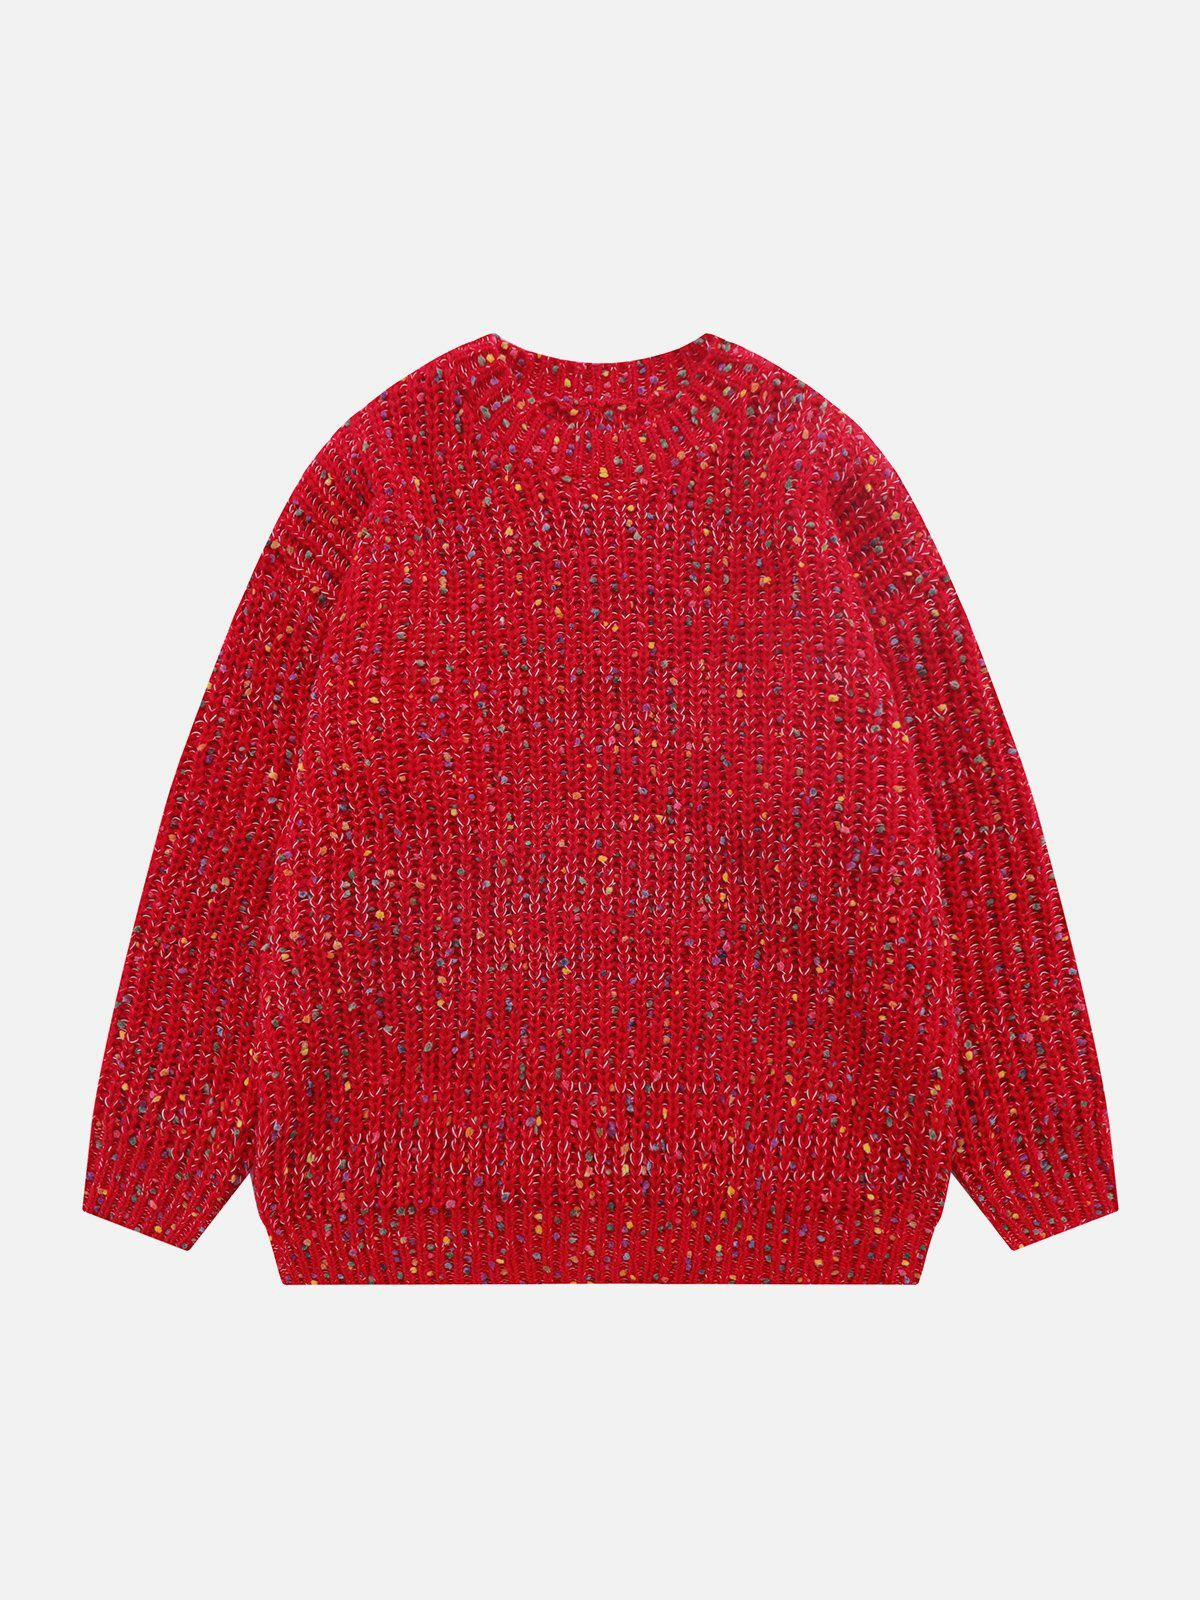 colorful dot sweater retro & vibrant streetwear 6031